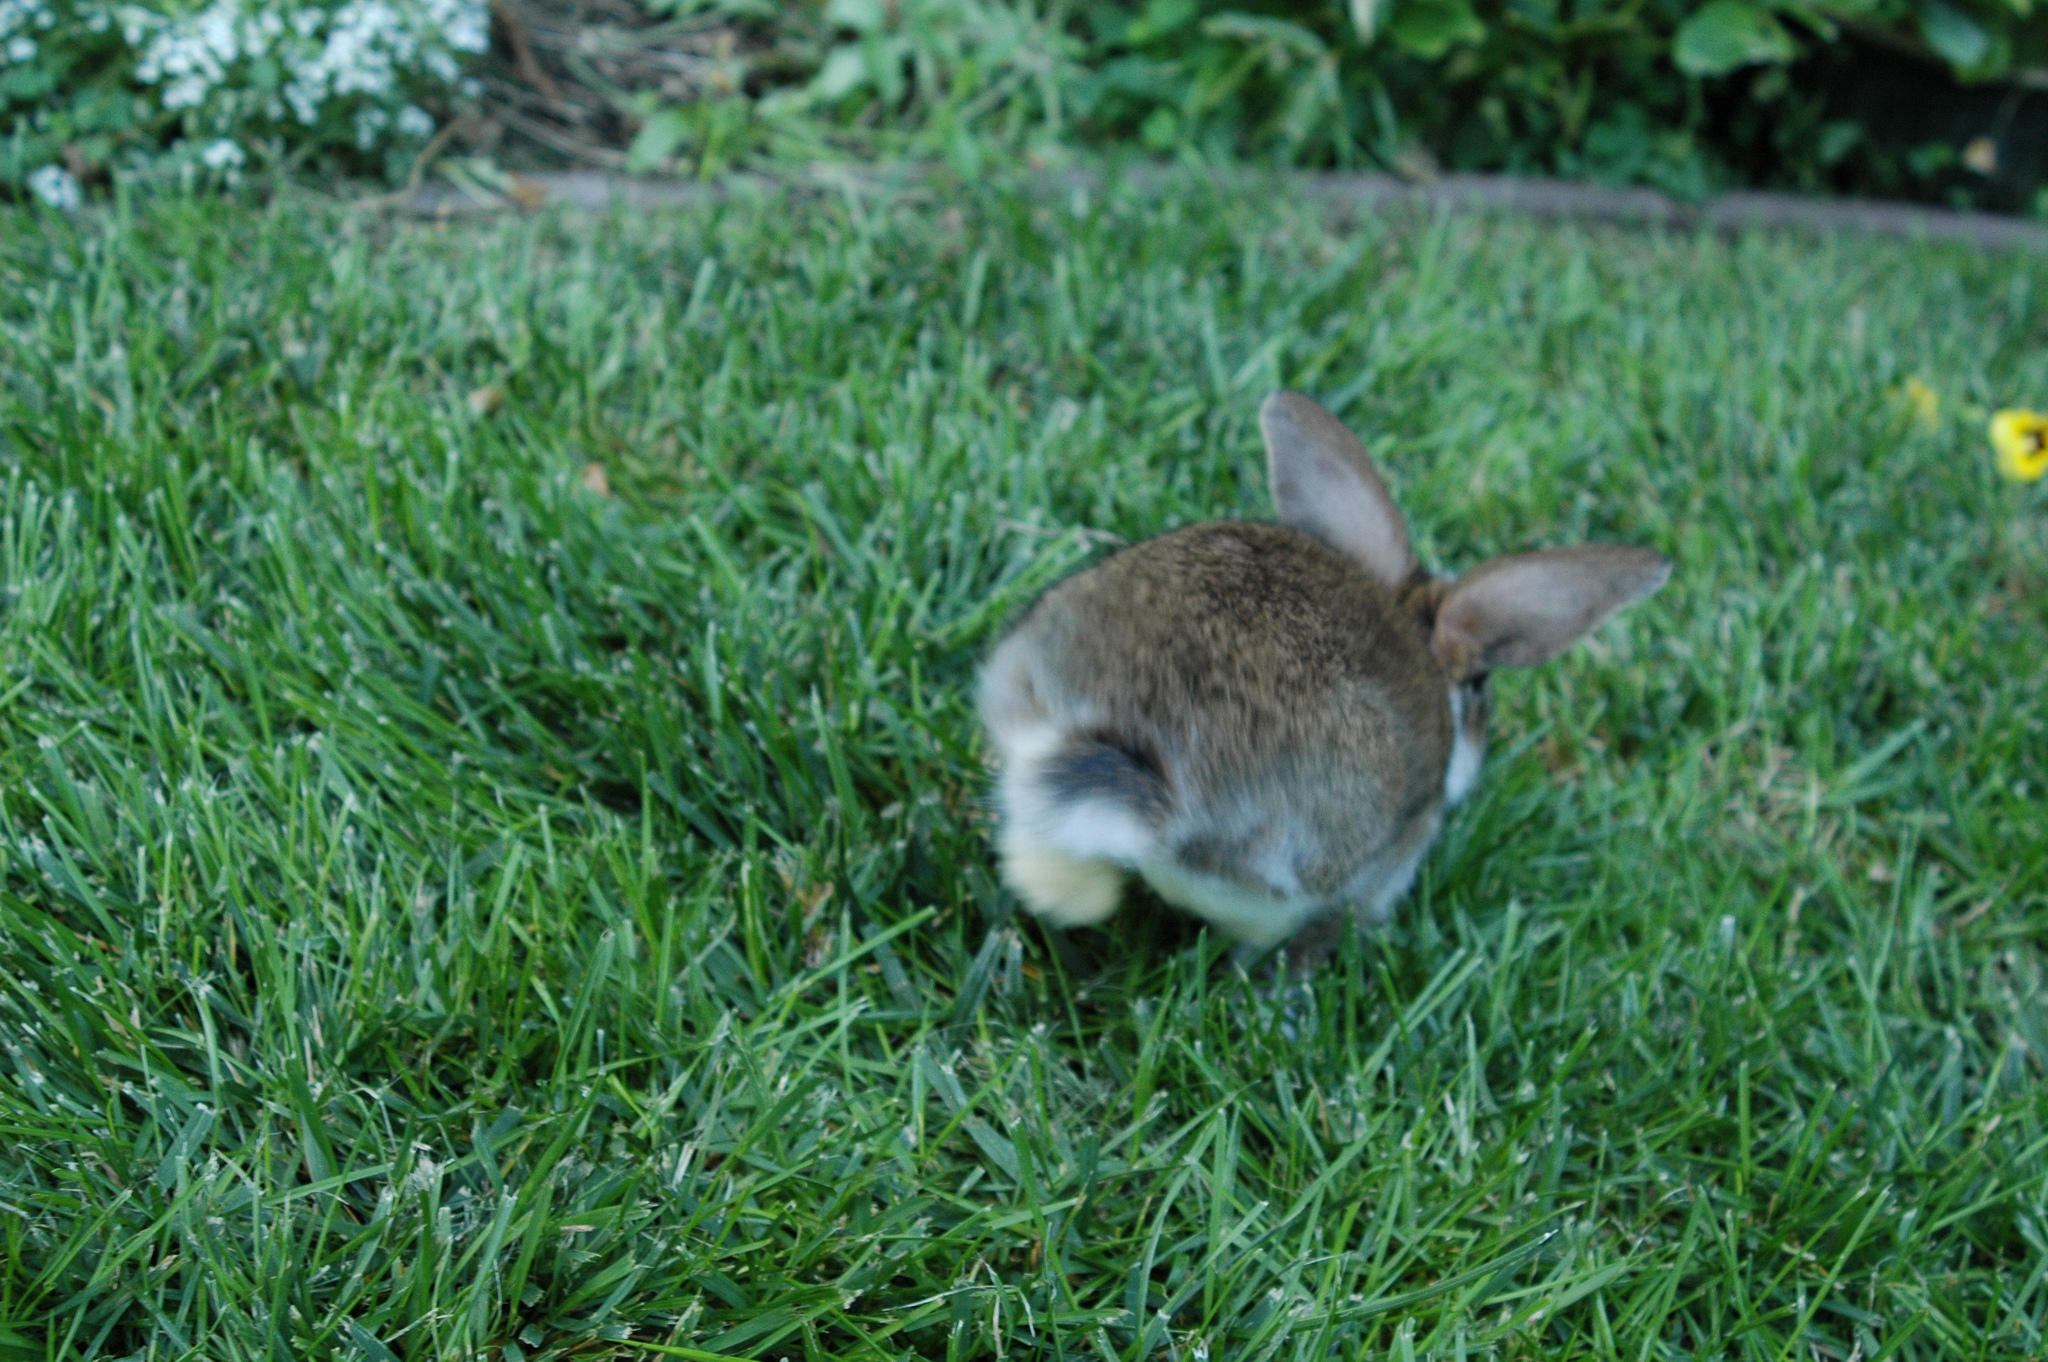 Action Shot of Bunny Landing a Big Hop